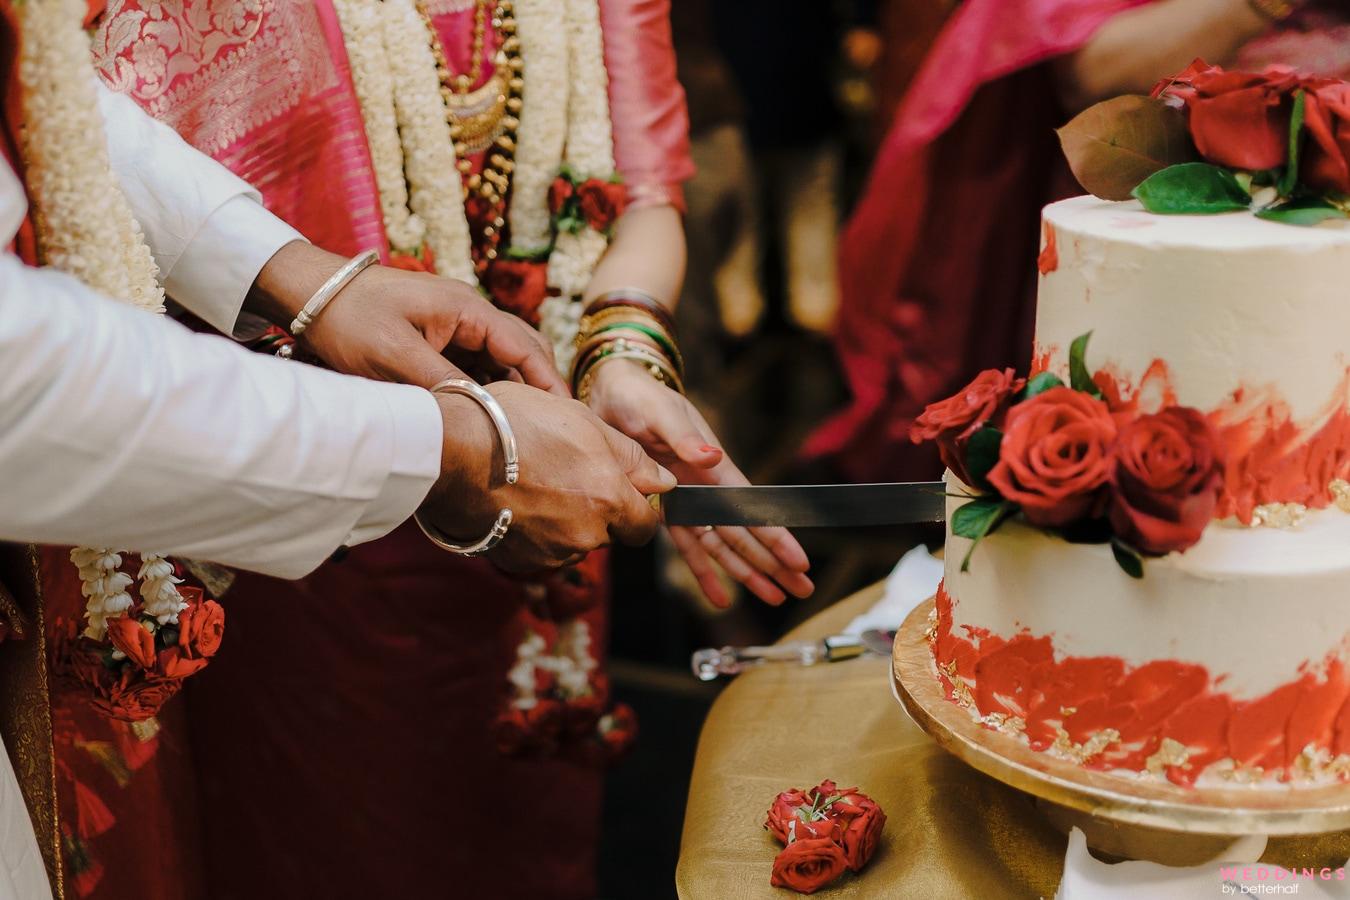 Wedding or Ring Ceremony Theme Cake - Avon Bakers